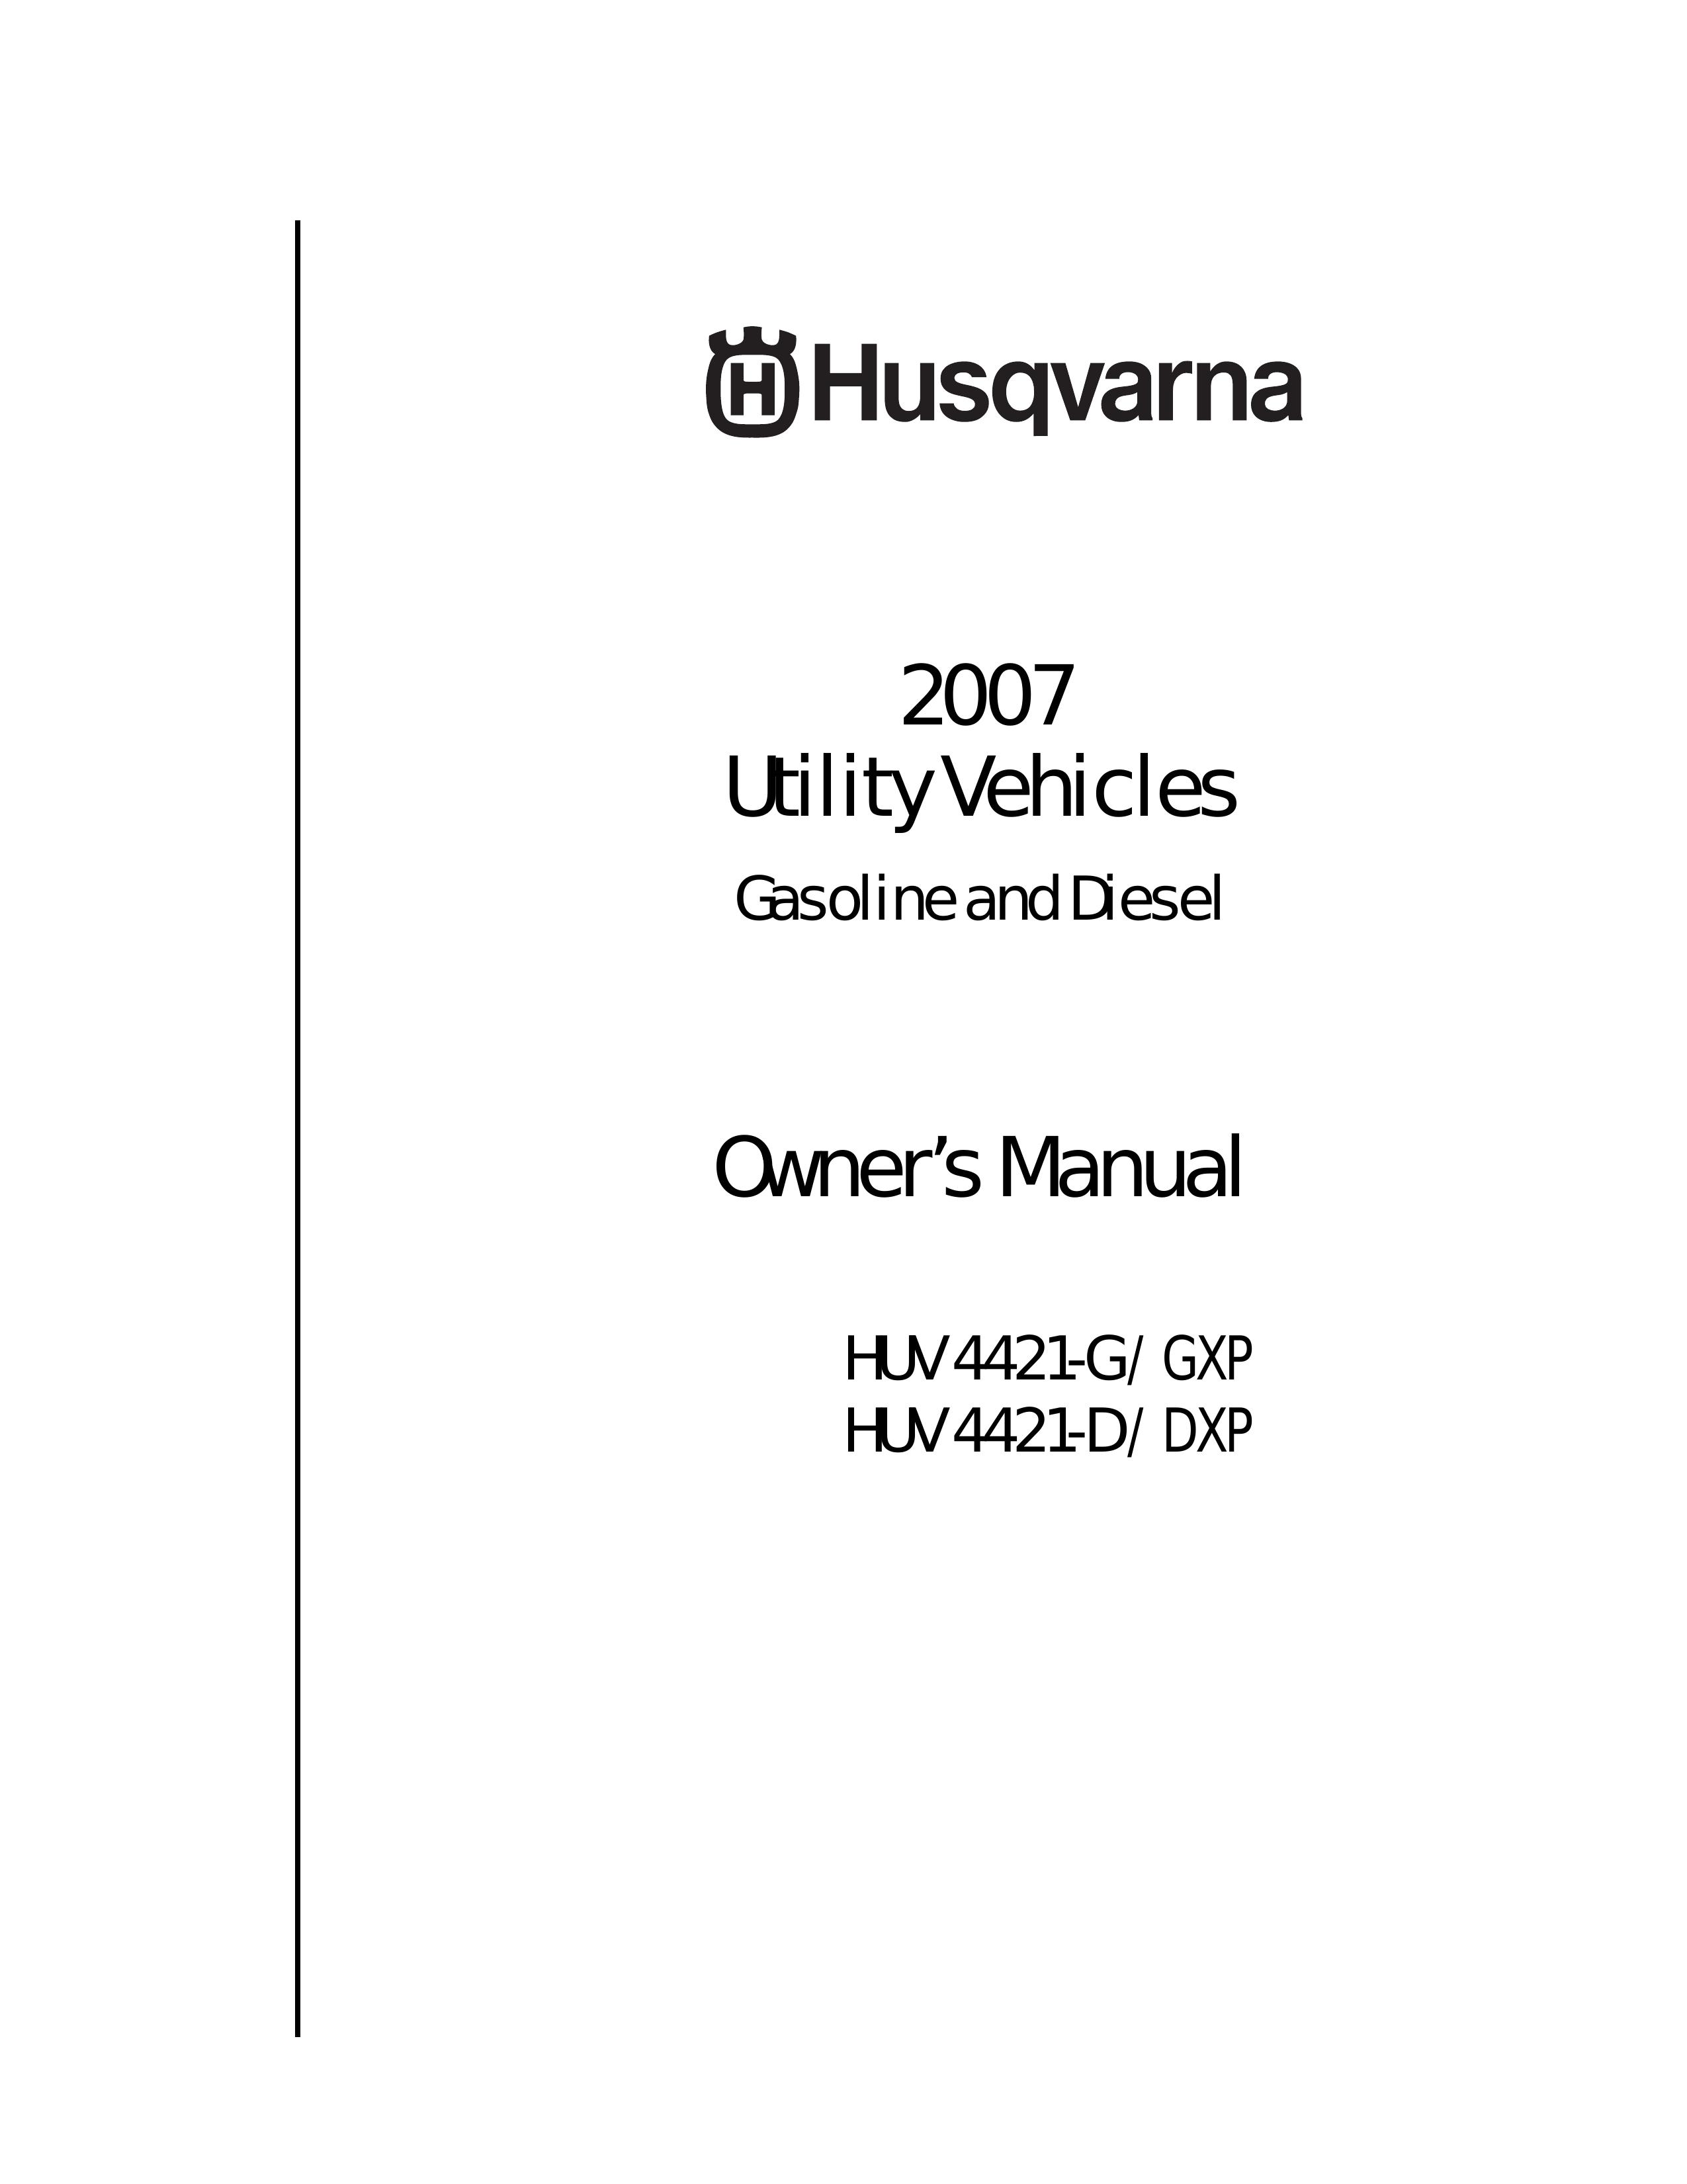 Husqvarna HUV 4421-G / GXP Utility Vehicle User Manual